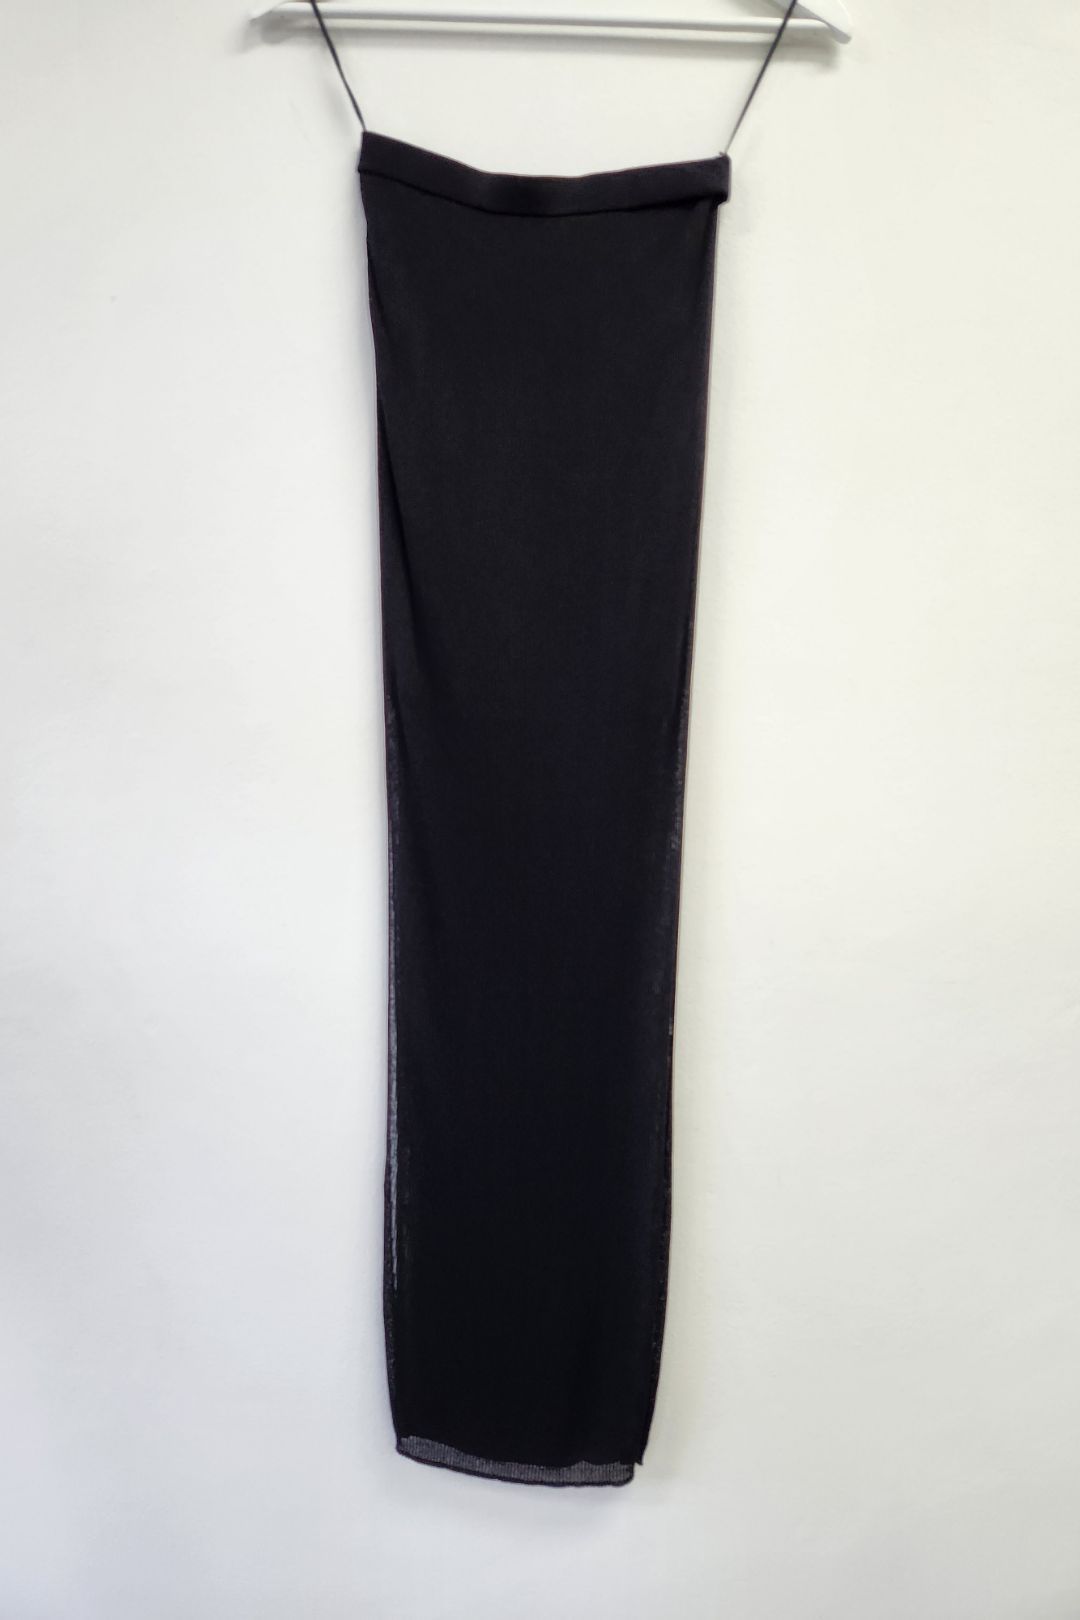 Bec and Bridge - Black Moonlight Knit Maxi Skirt